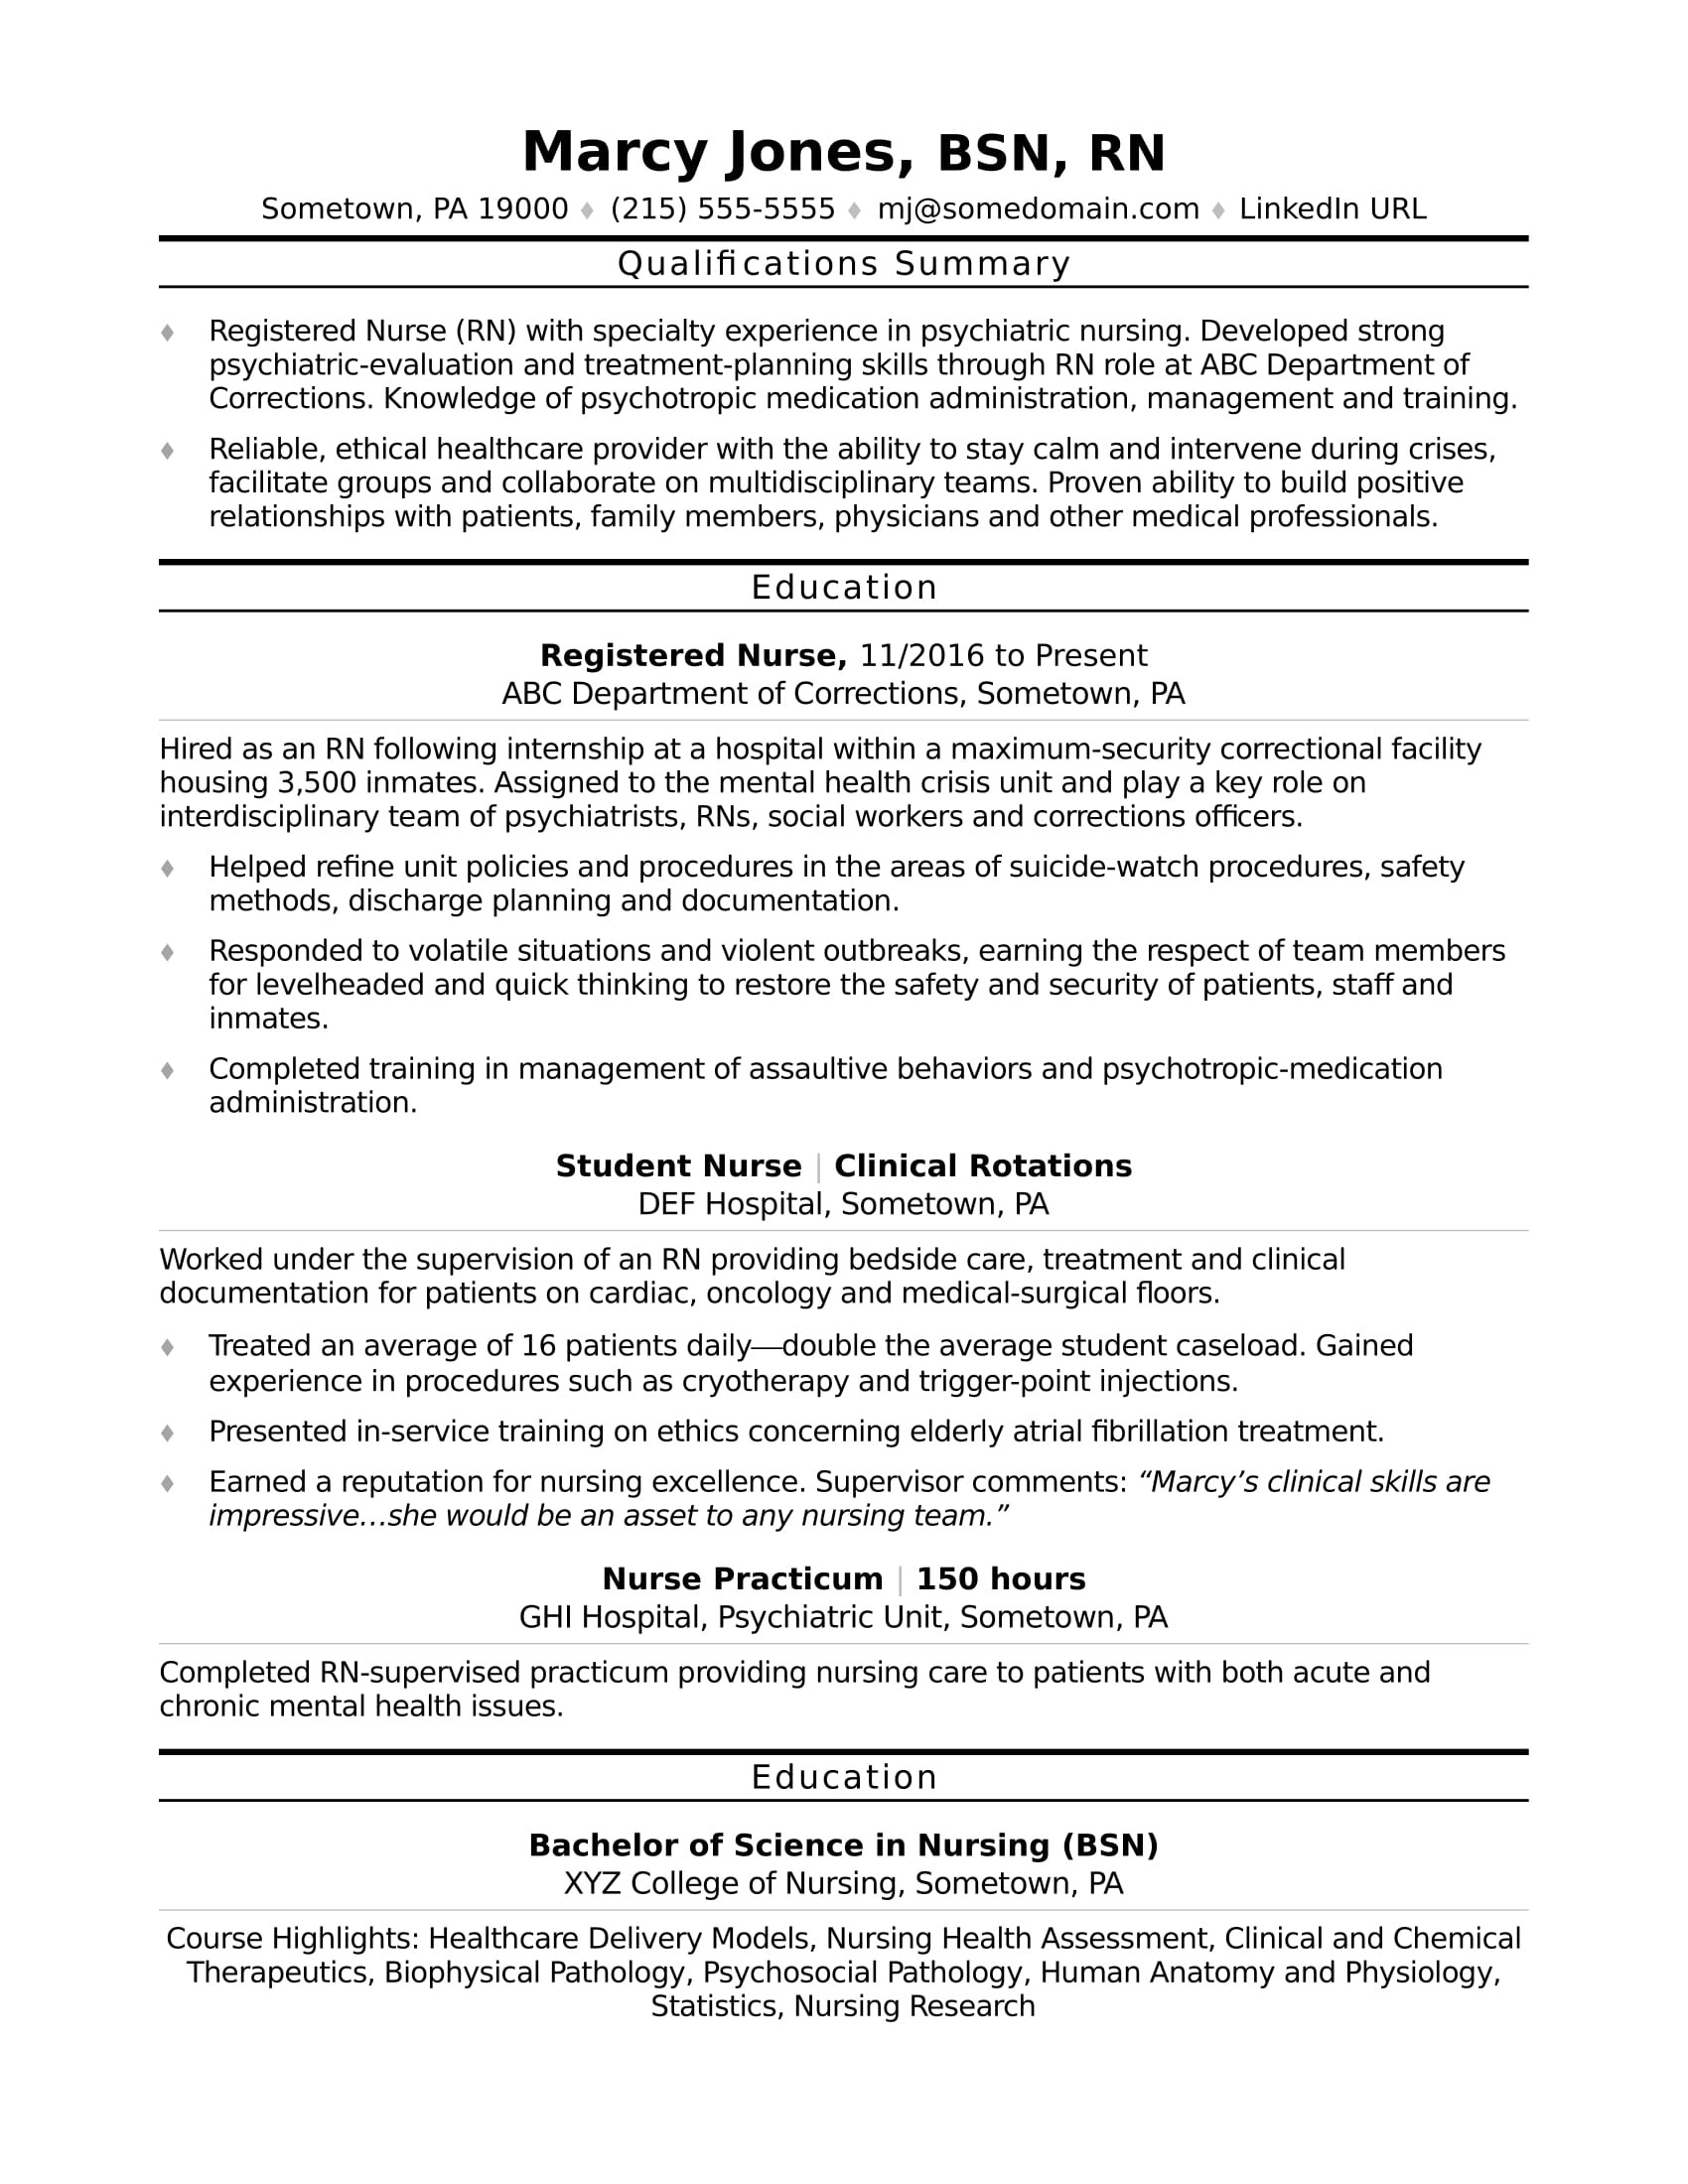 Free Sample Resume for Registered Nurse Registered Nurse (rn) Resume Sample Monster.com